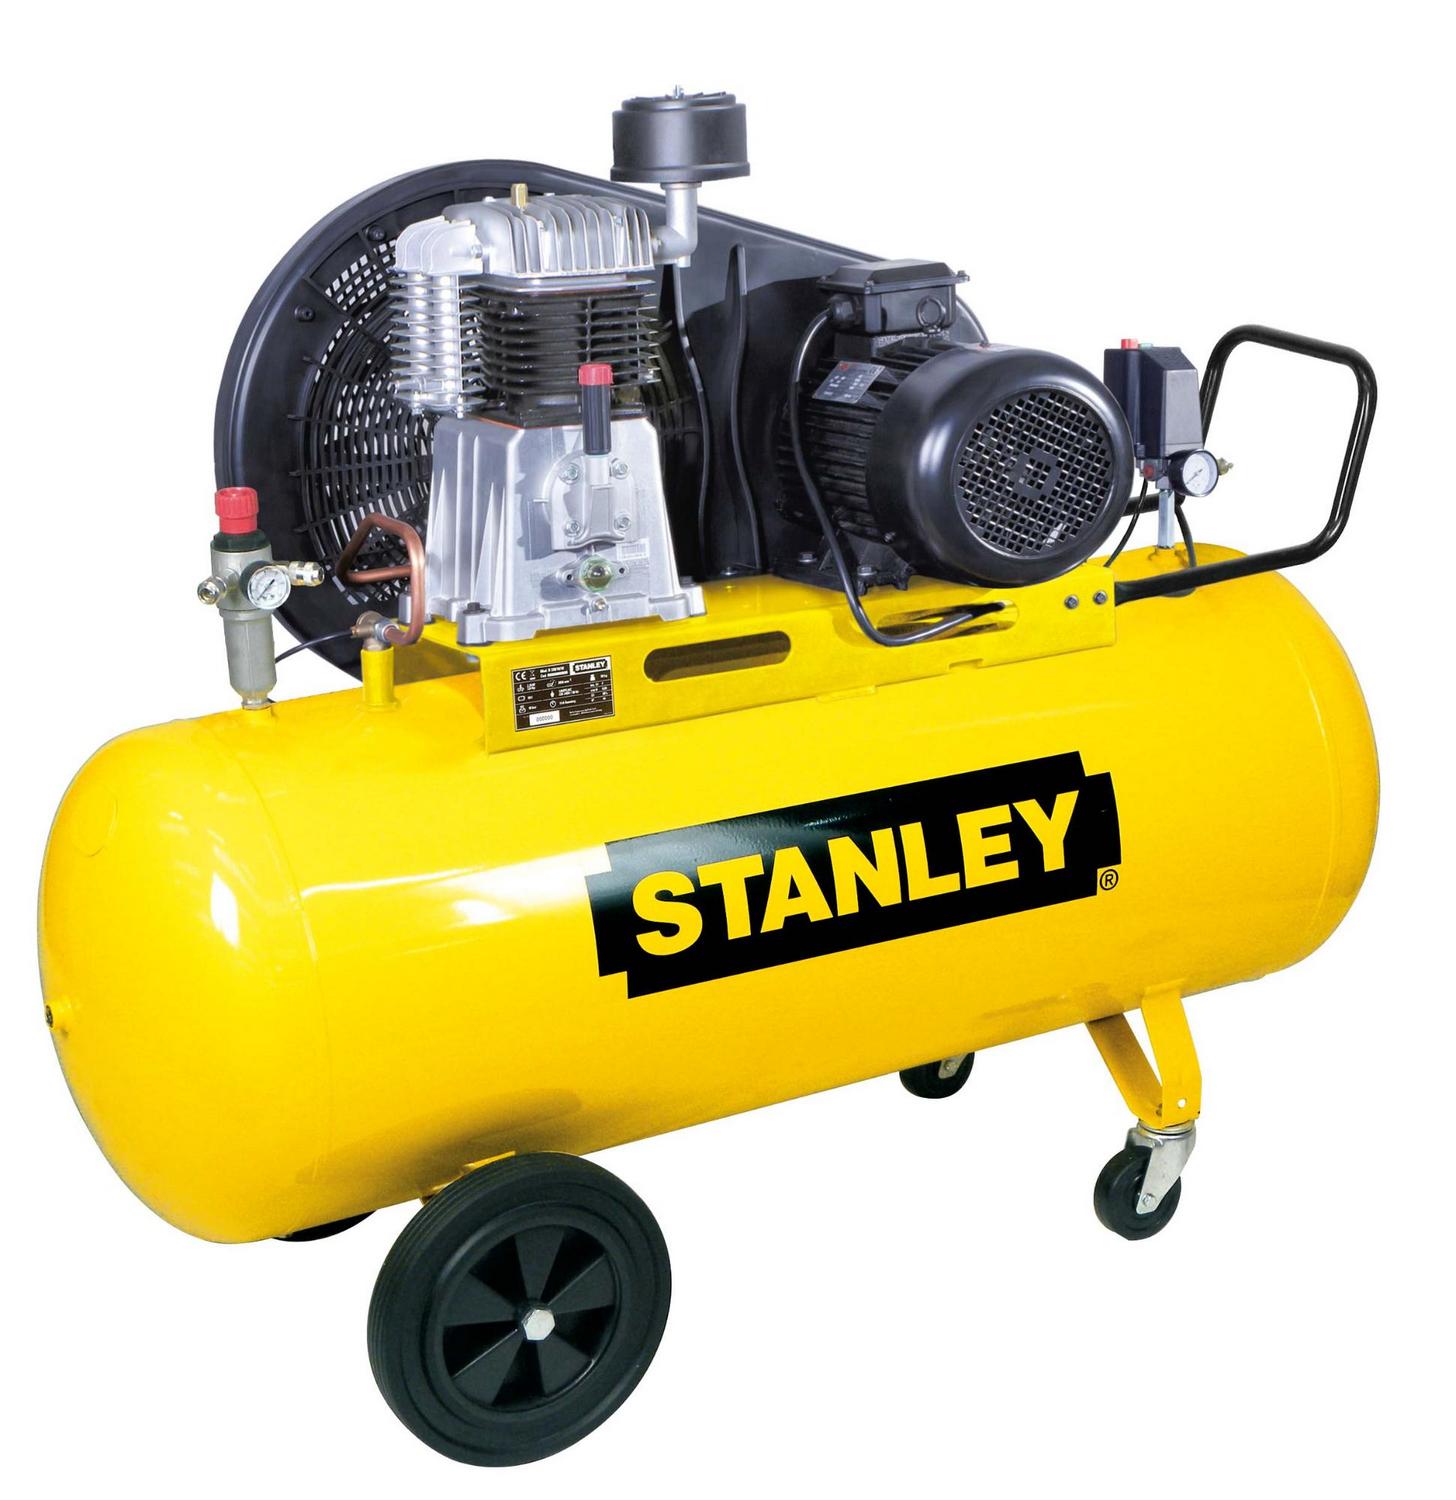 Kompresor Stanley BA 651/11/500